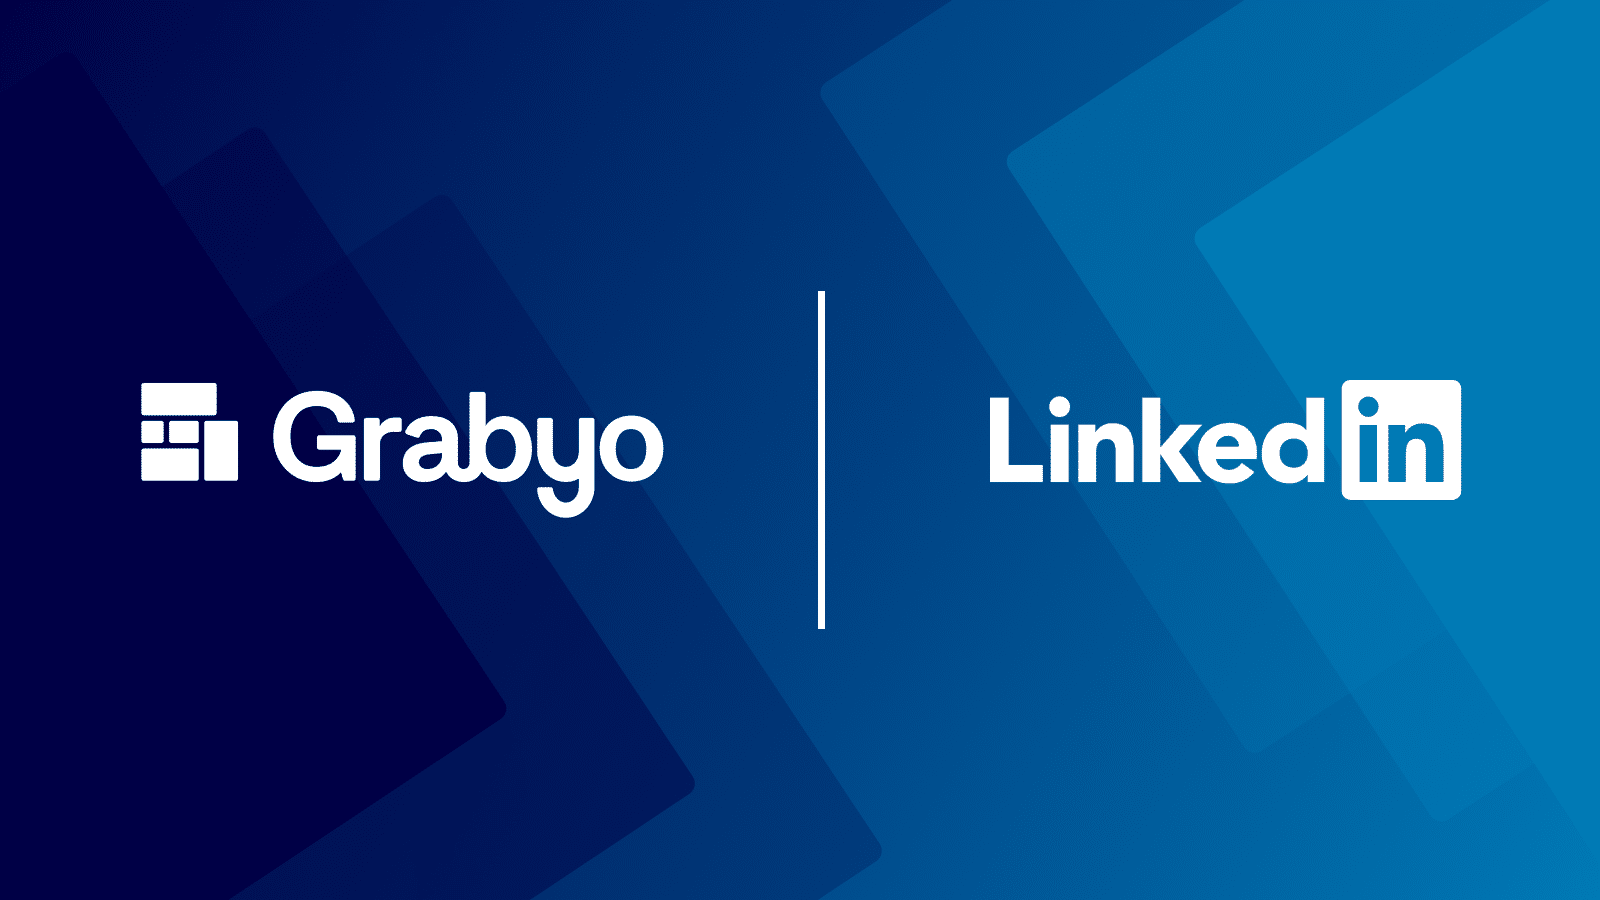 Live stream to Linkedin with Grabyo!